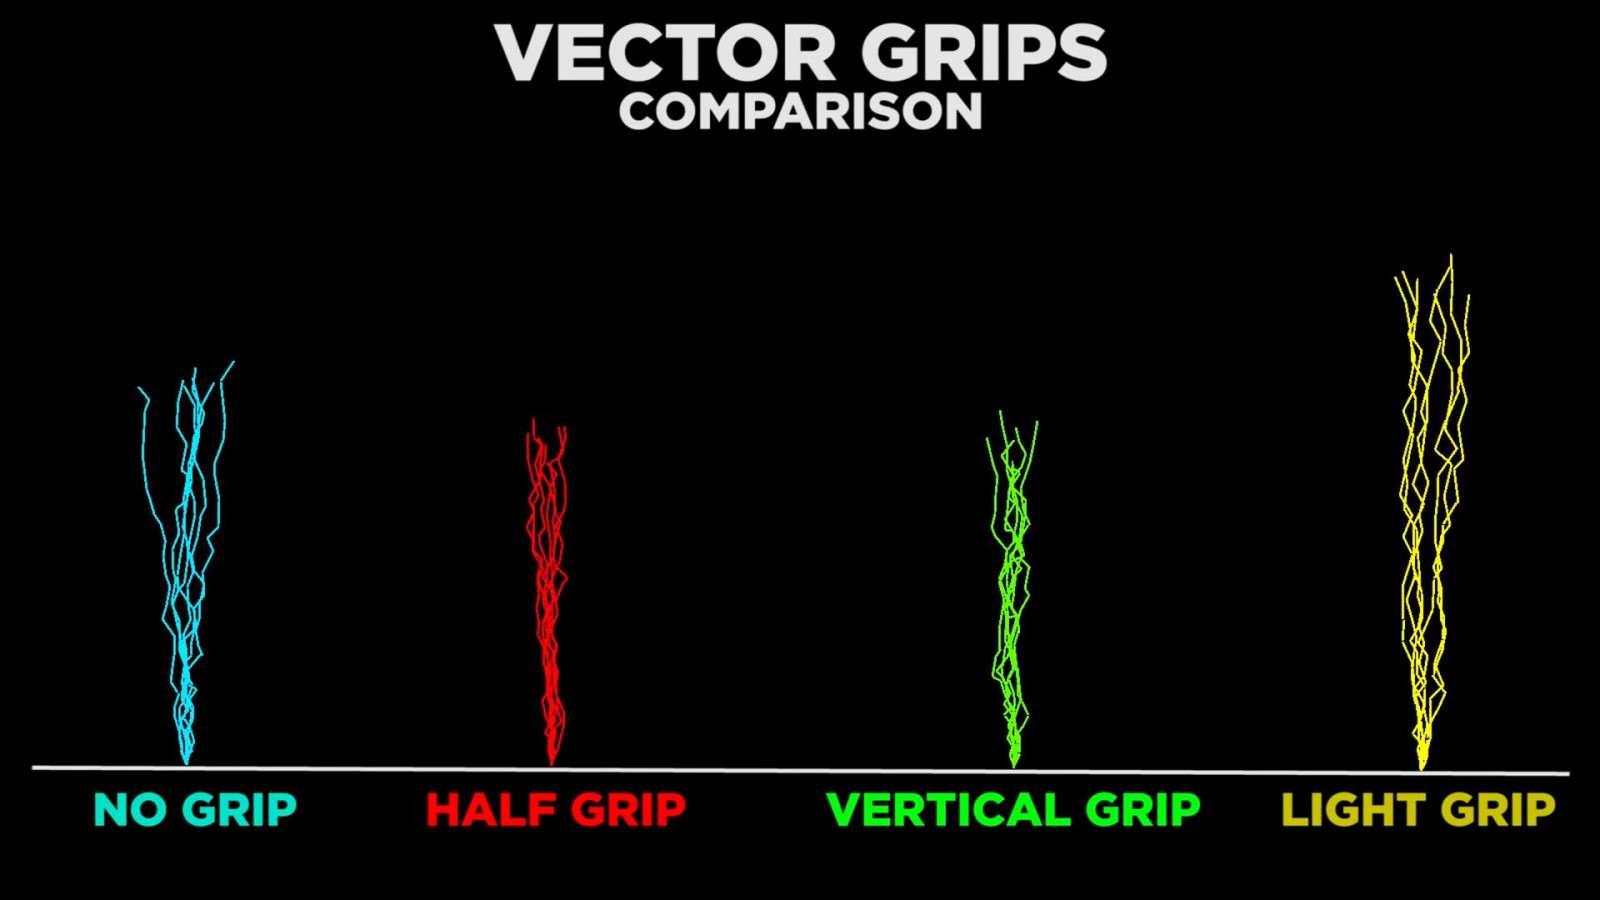 Light grip now fits Vector